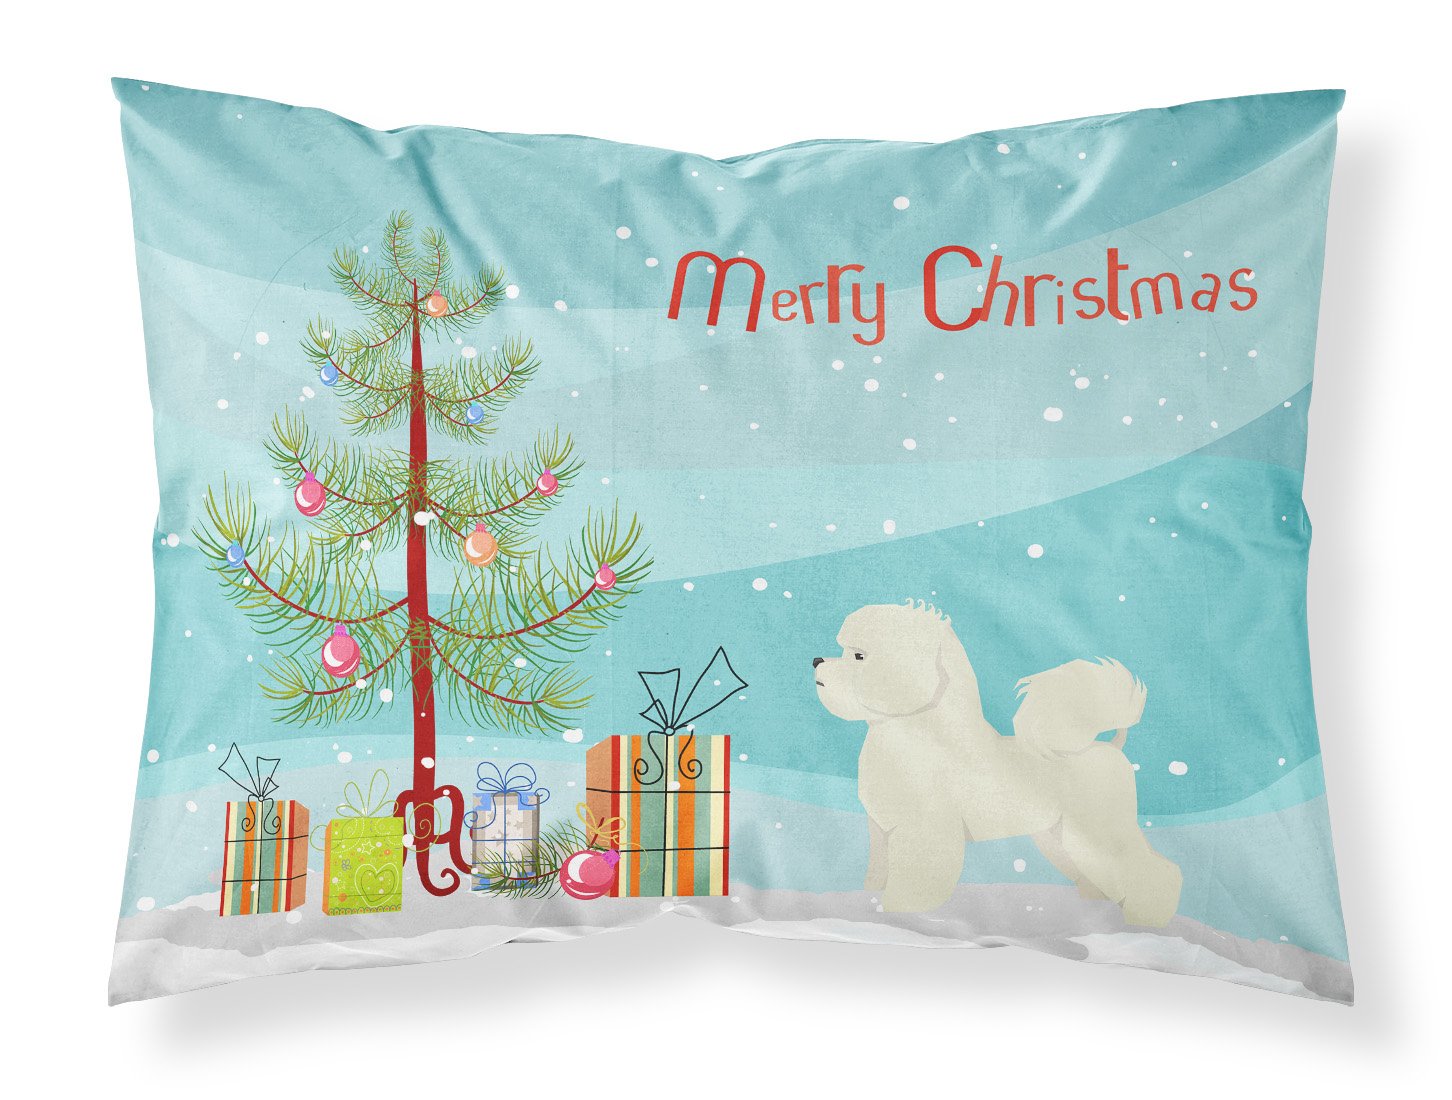 Bichon Frise Christmas Tree Fabric Standard Pillowcase CK3521PILLOWCASE by Caroline's Treasures